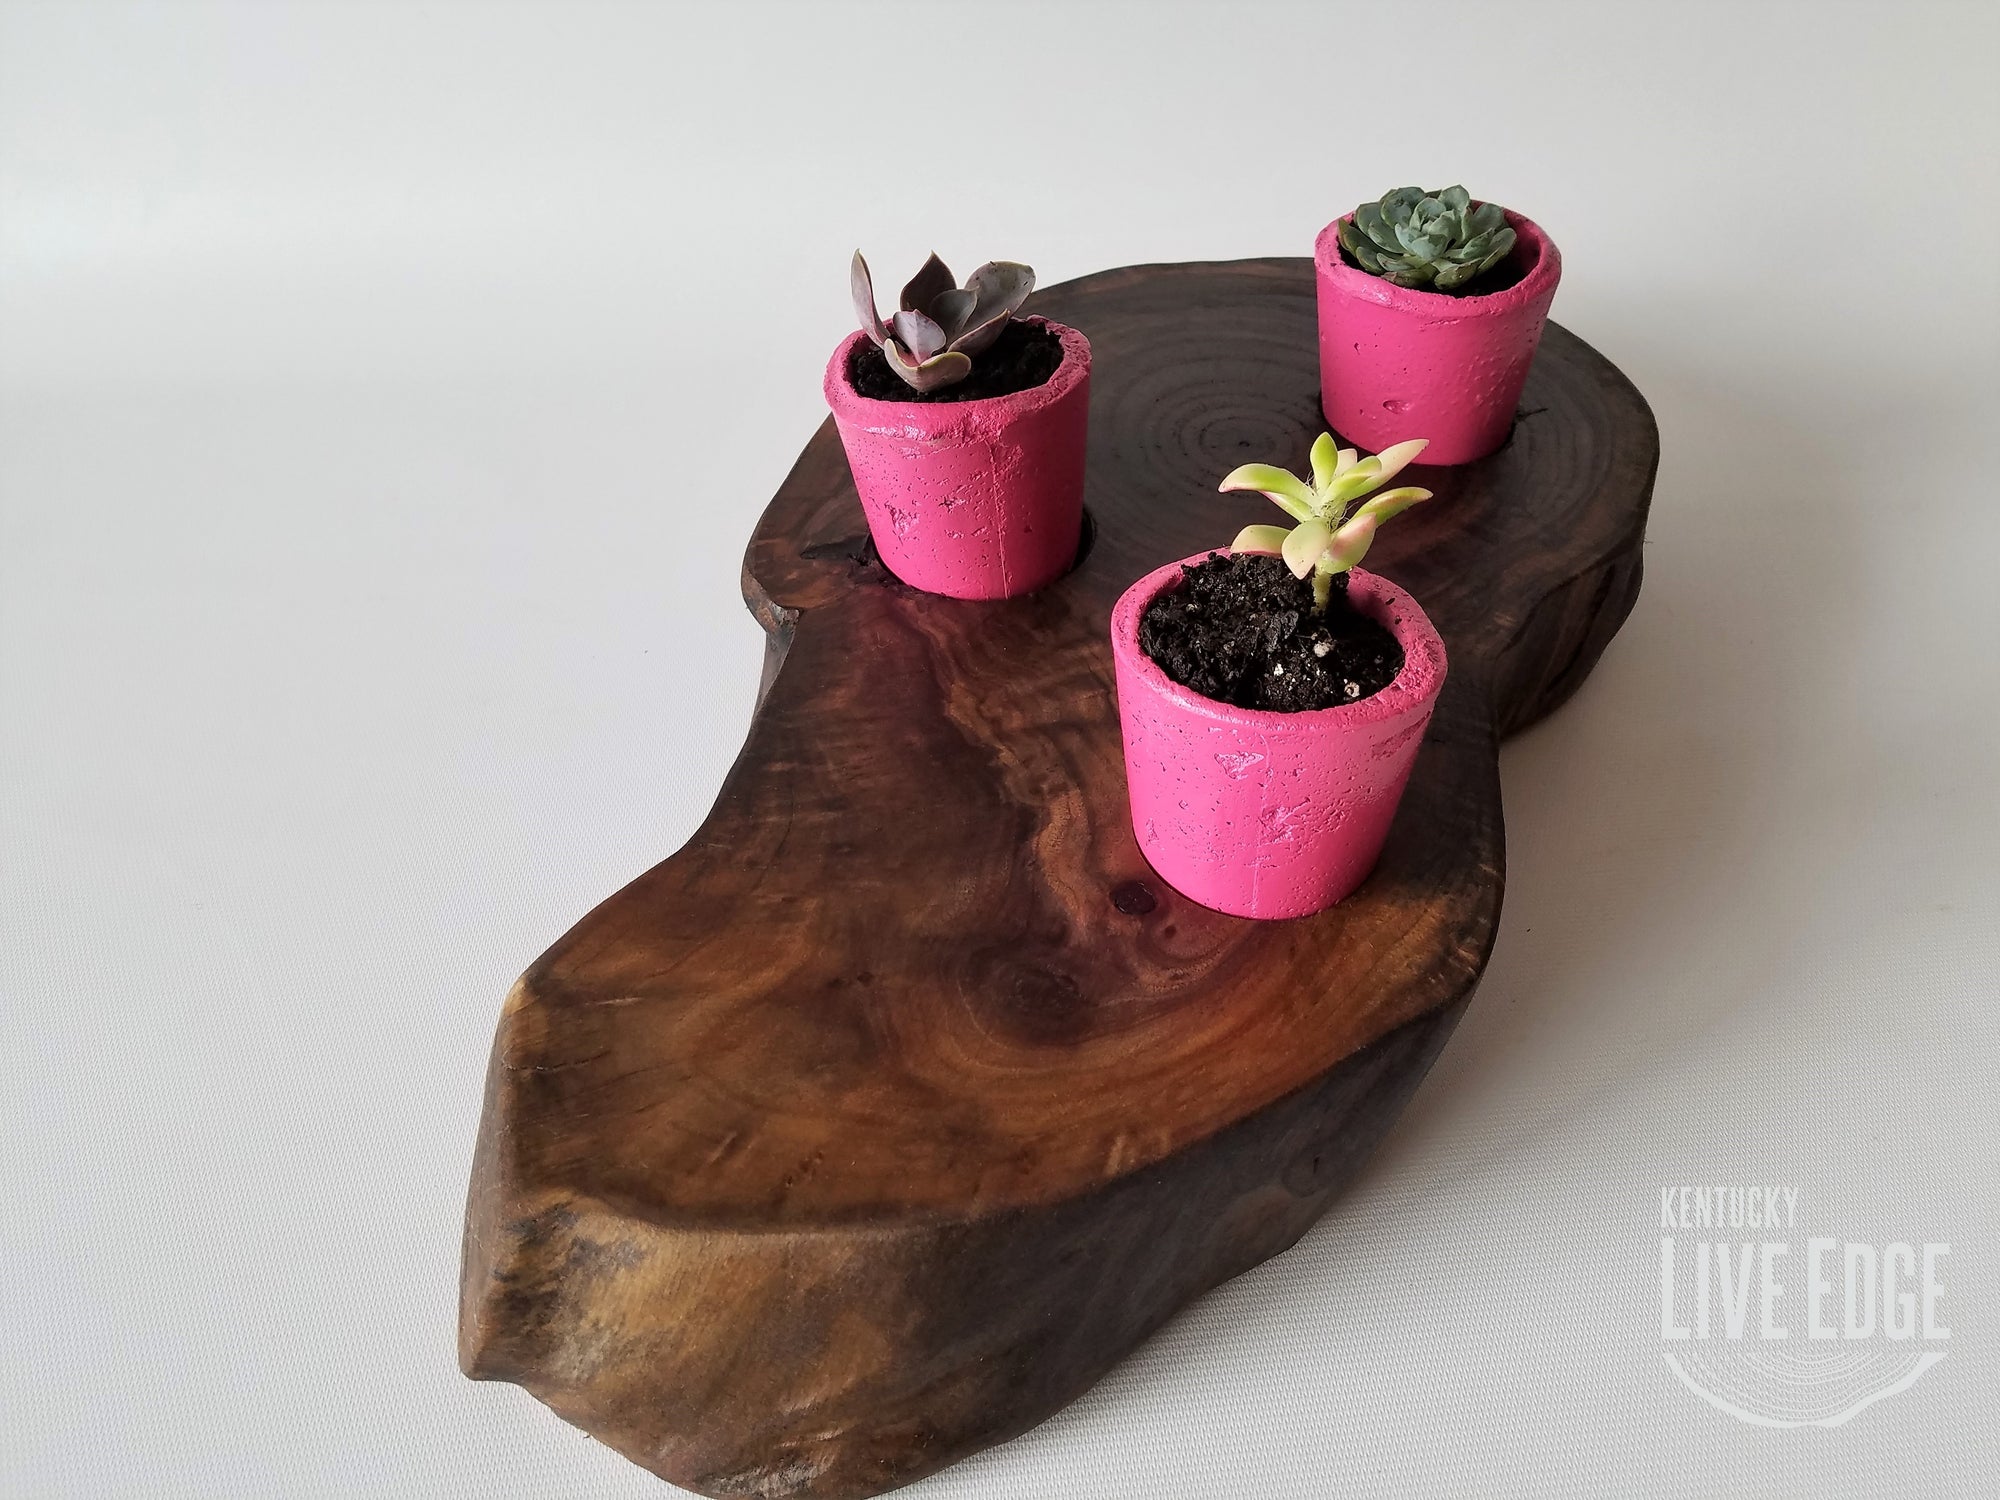 Succulent Planter- Live Edge- Tree Round- Walnut- Pink- Cacti- Cement- Pots- Planters- Mini Planter- Home Decor- Organic- Modern- Rustic